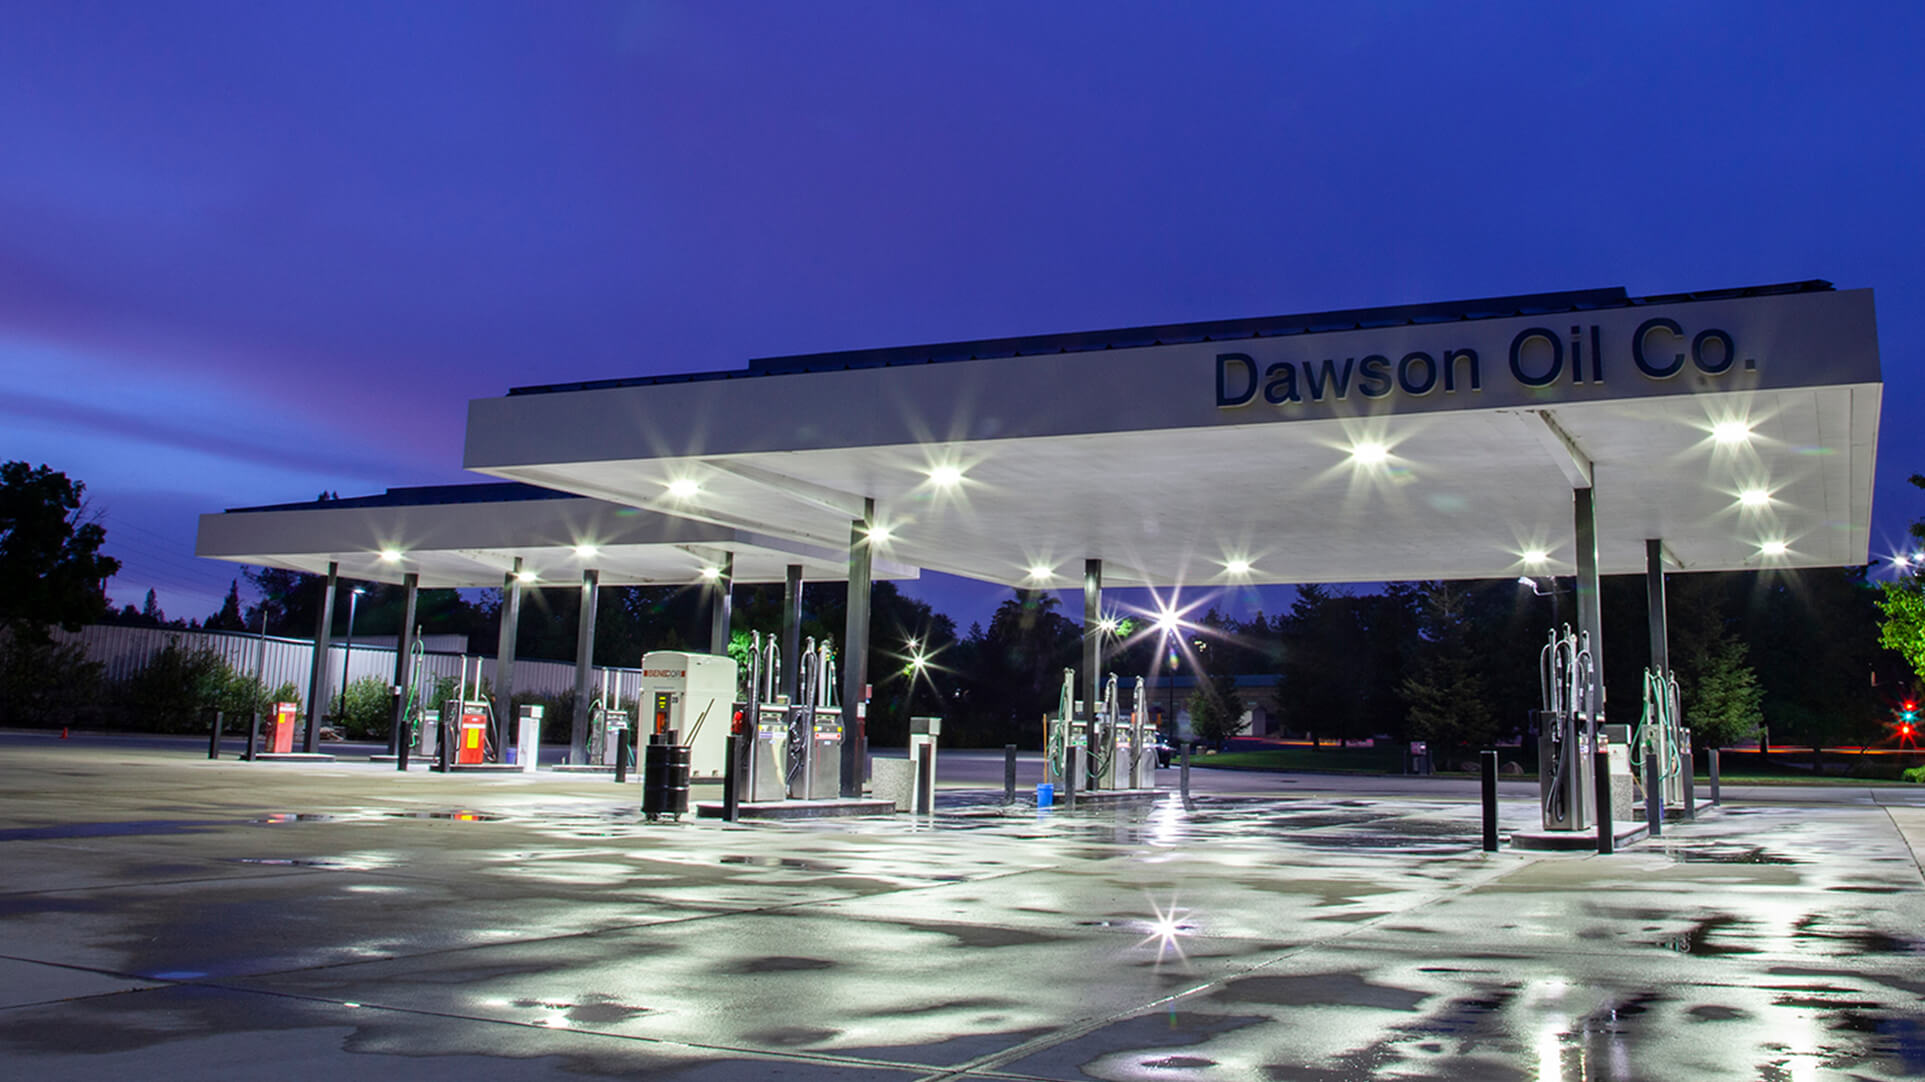 An image of the Dawson Oil location in Diamond Springs, California